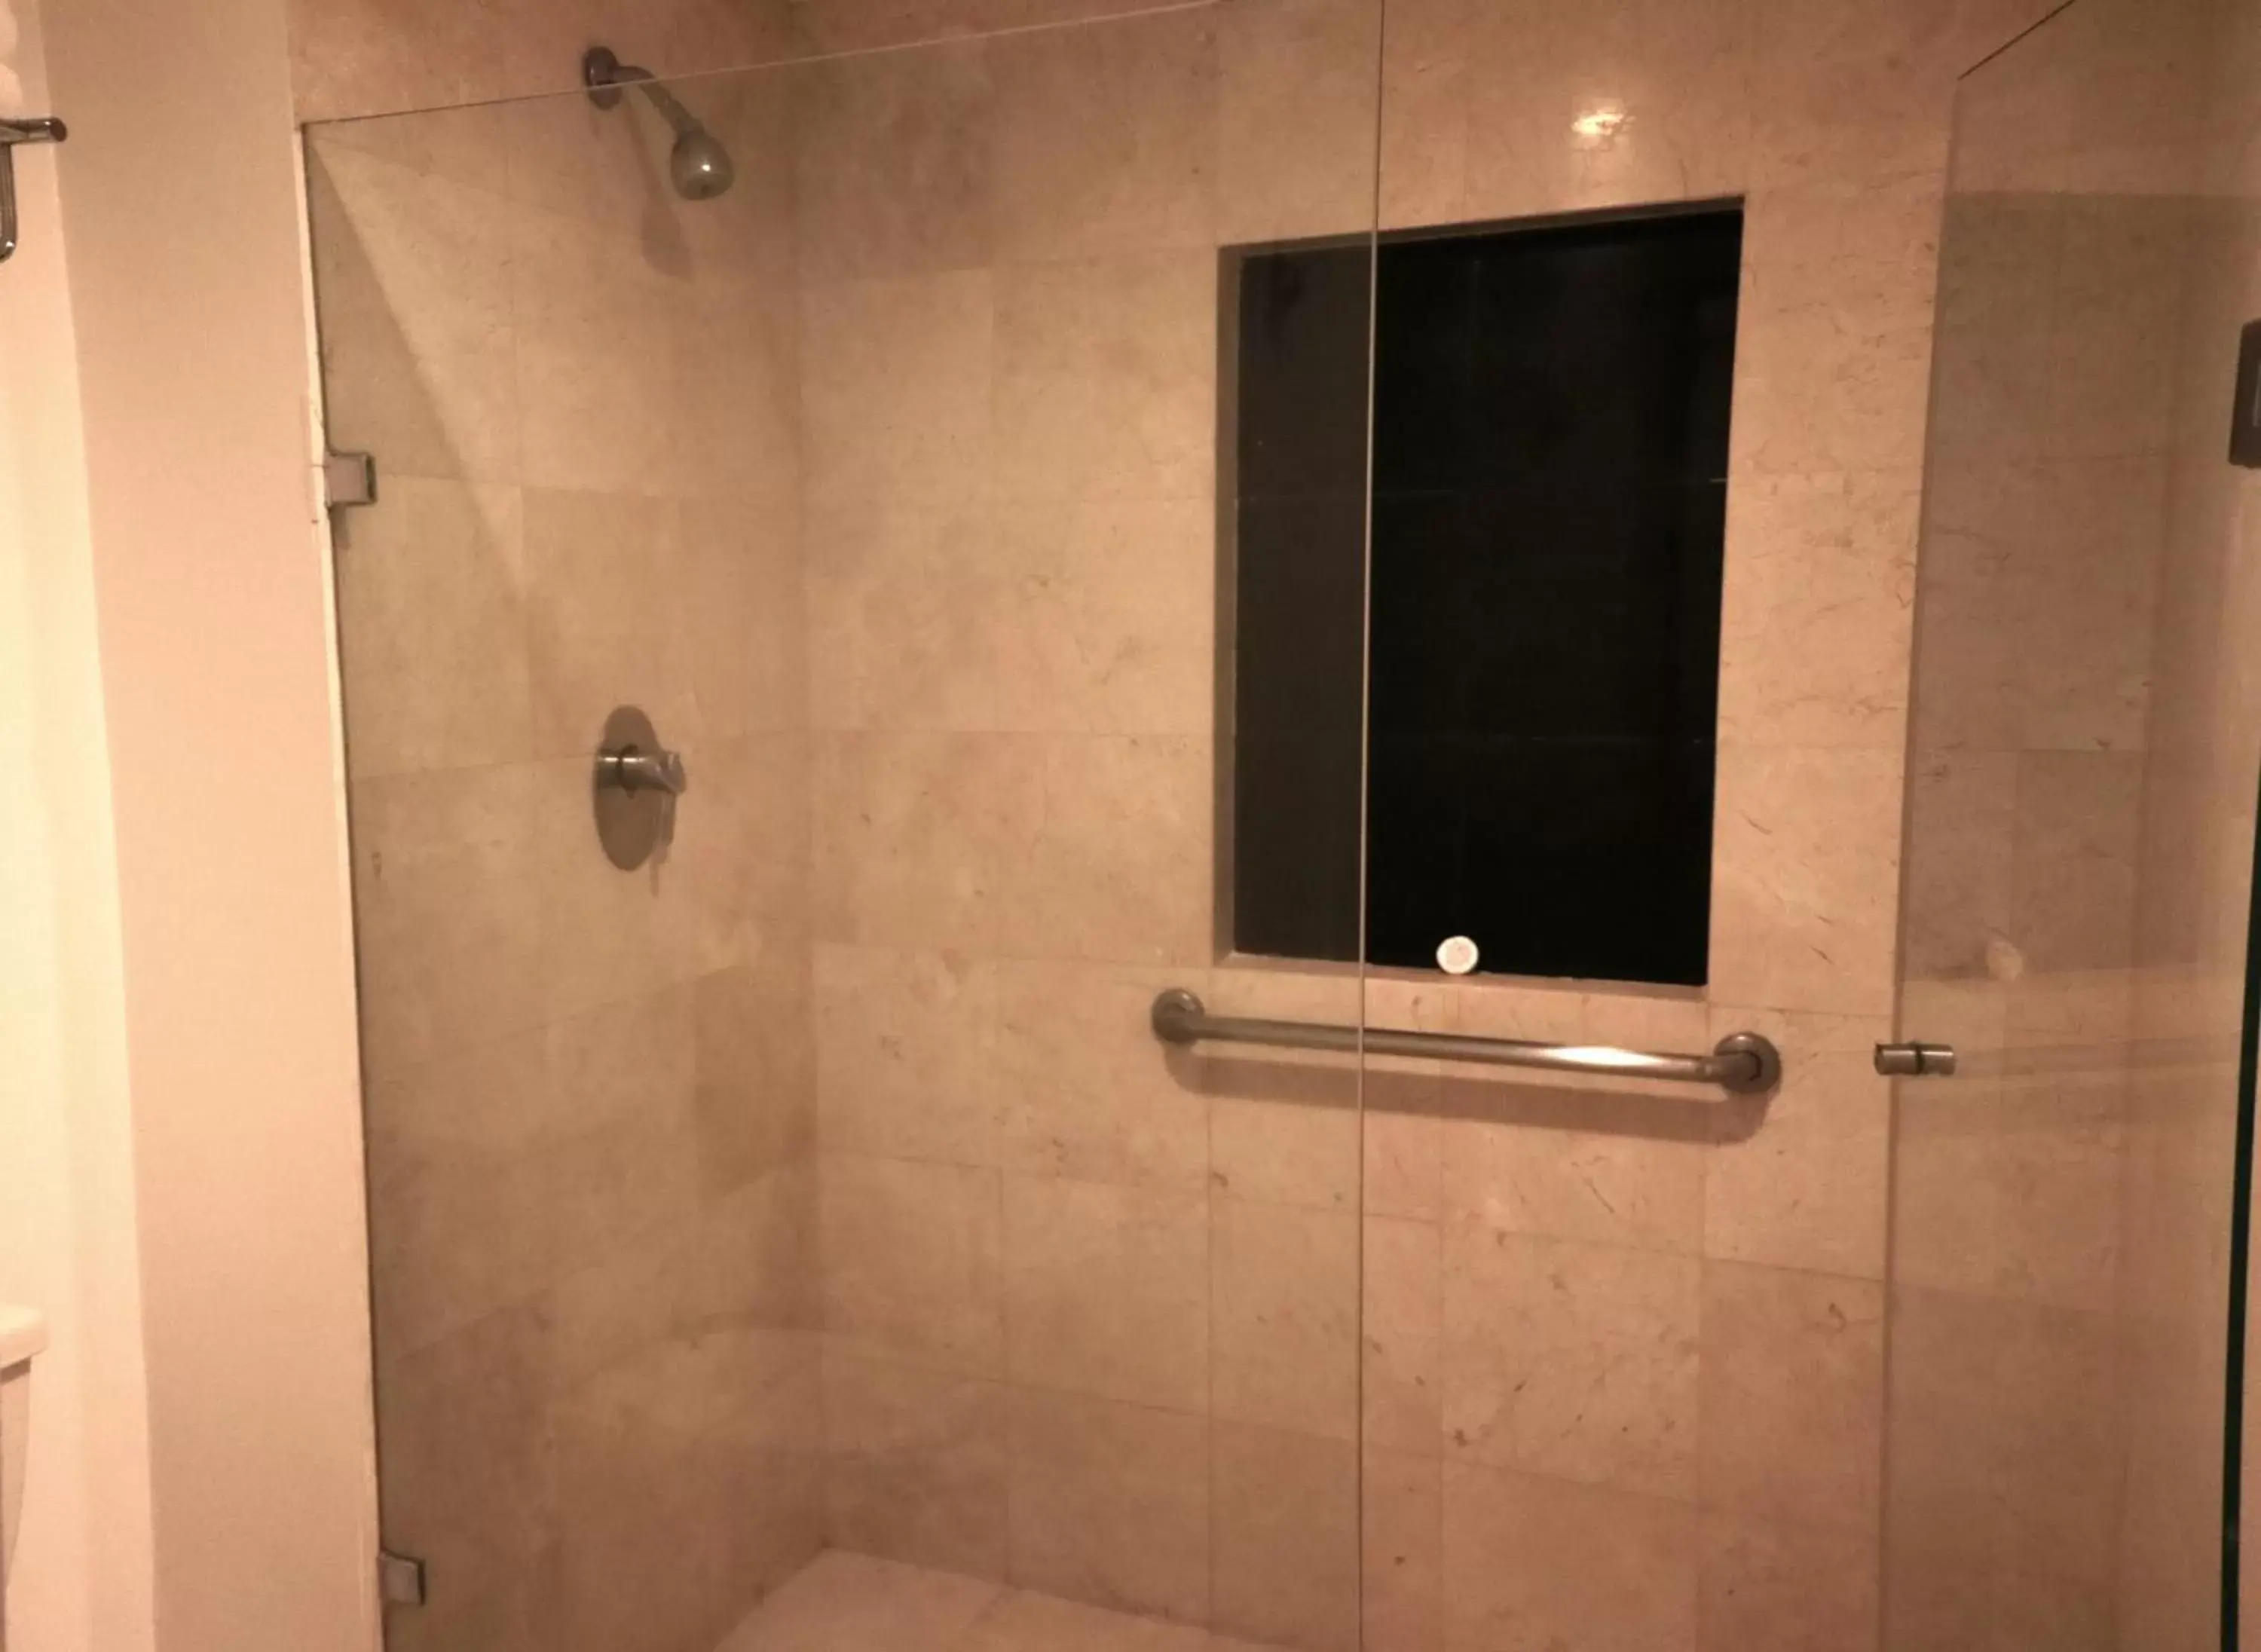 Shower, Bathroom in Hotel & Suites PF